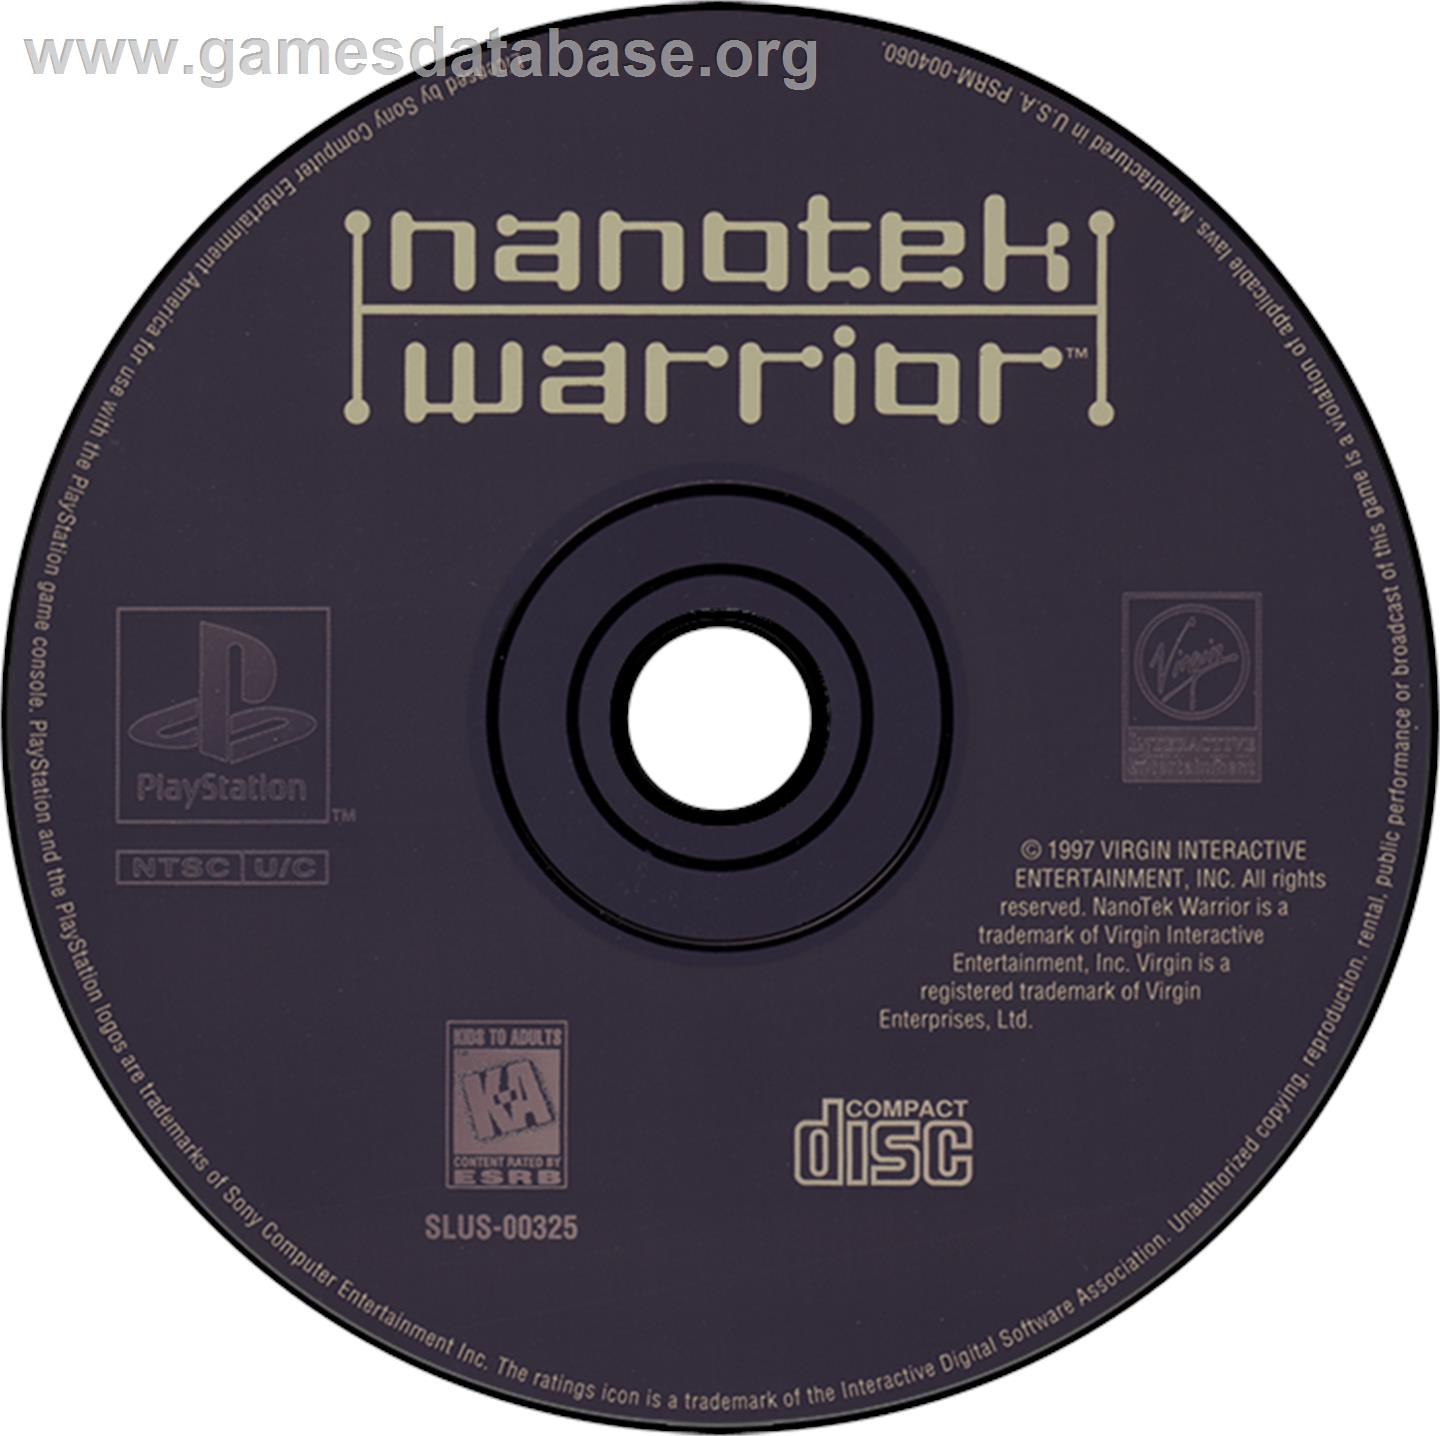 NanoTek Warrior - Sony Playstation - Artwork - Disc